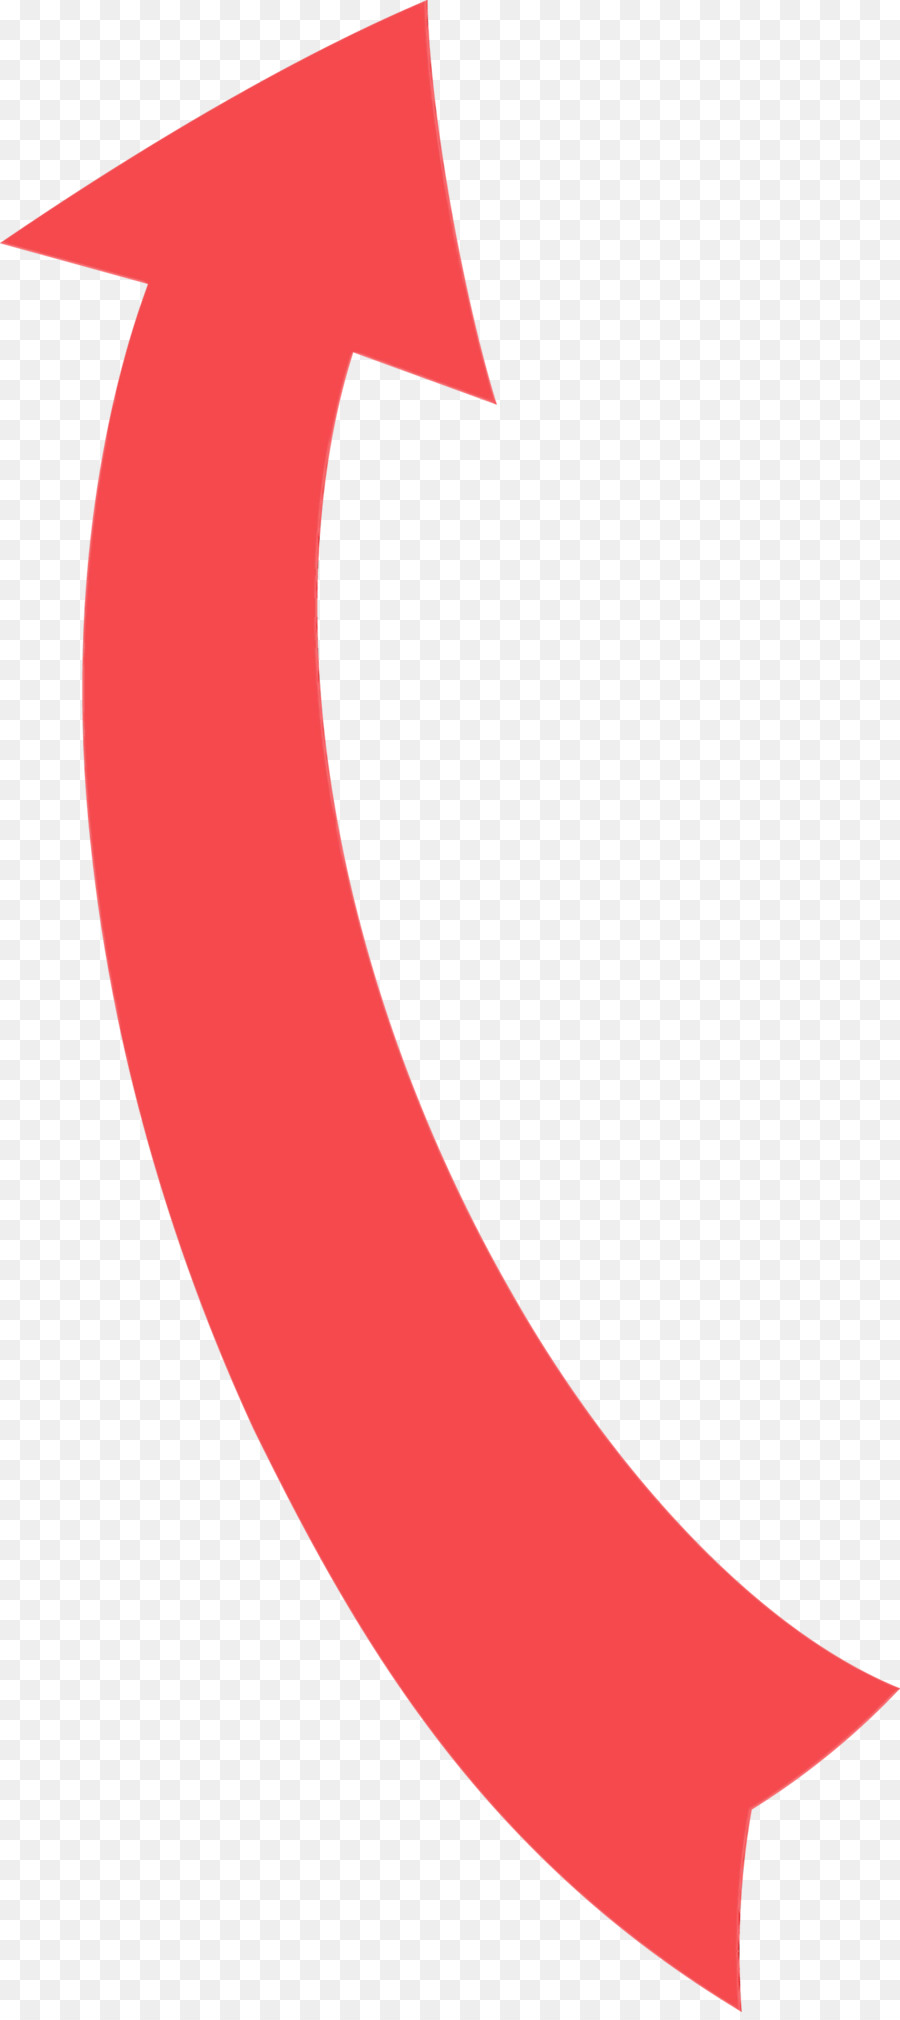 logo di carattere materiale proprietà linea rossa - 